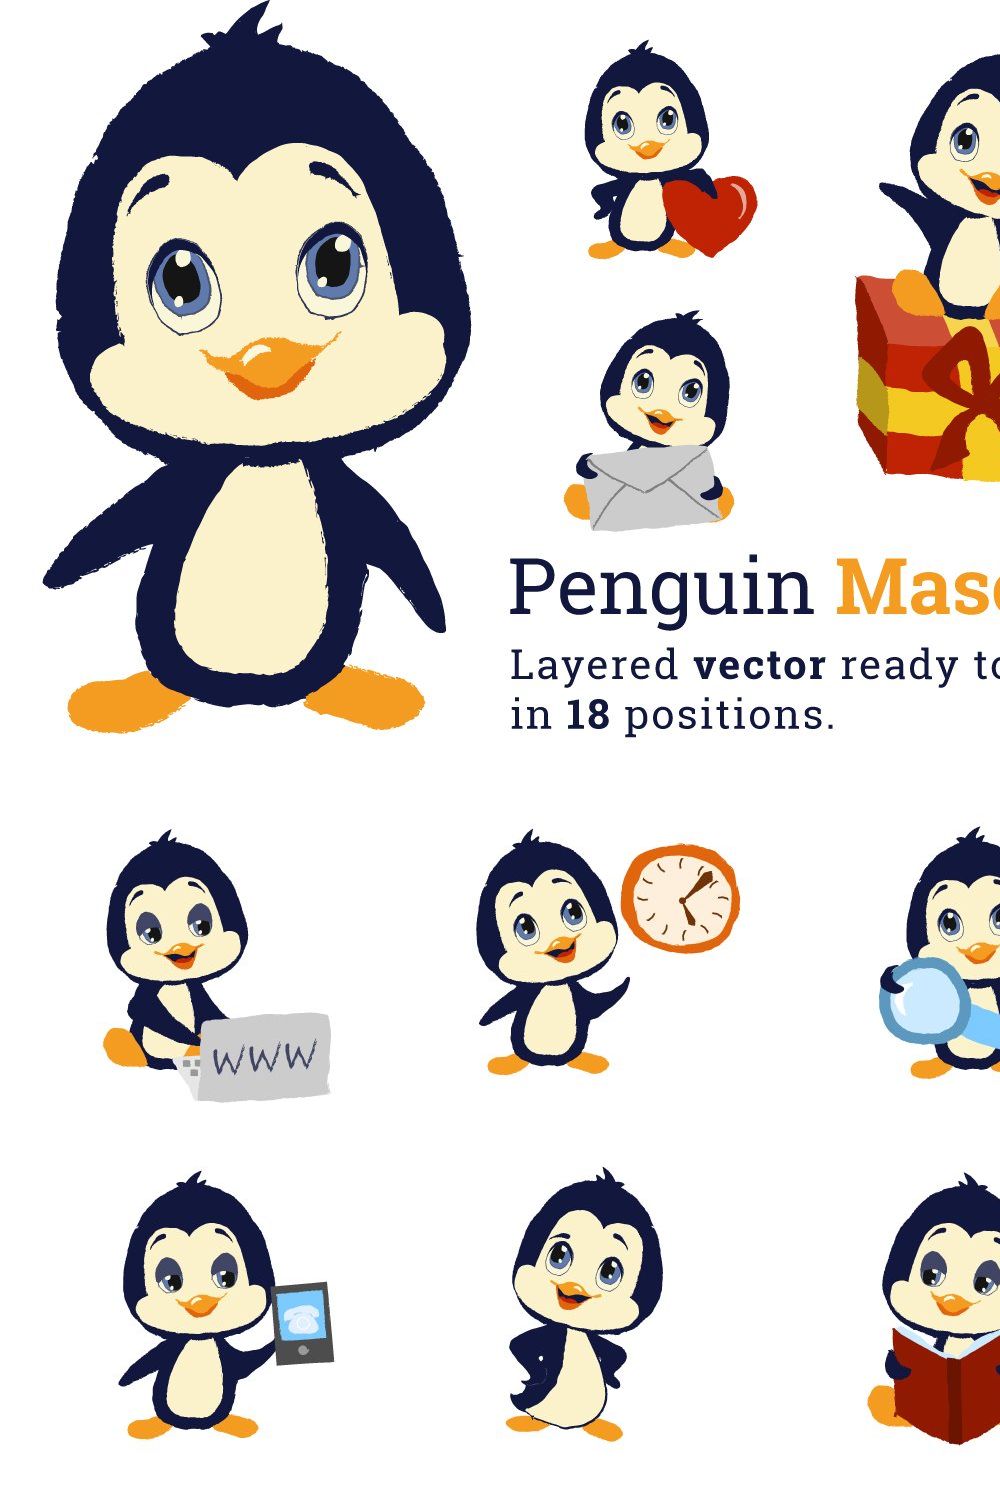 Penguin Mascot pinterest preview image.